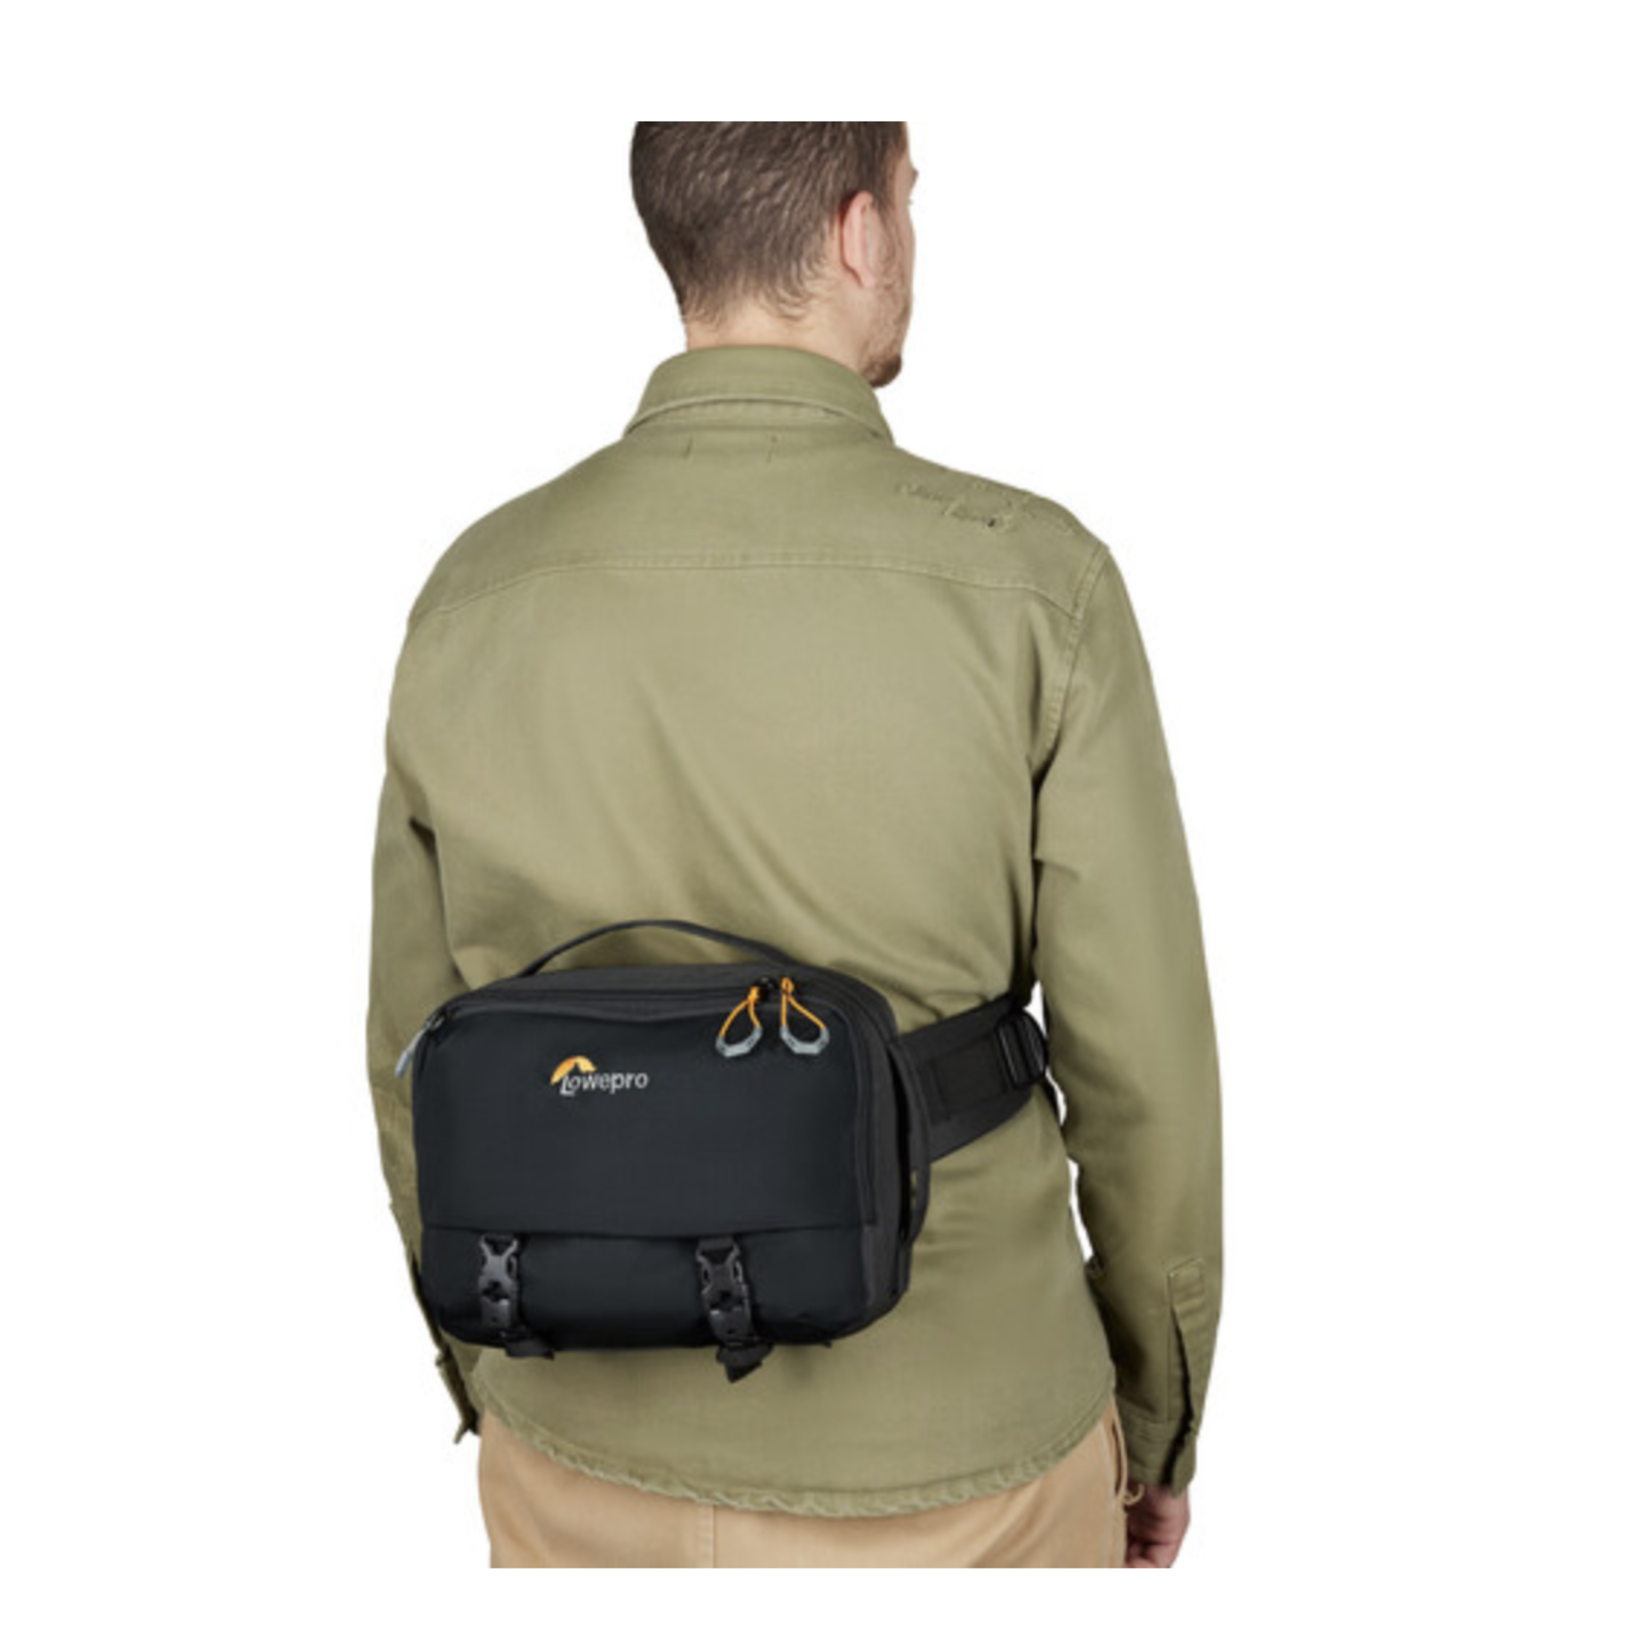 Lowepro Lowepro Trekker Lite SLX 120 Sling-Style Camera Bag (Black)